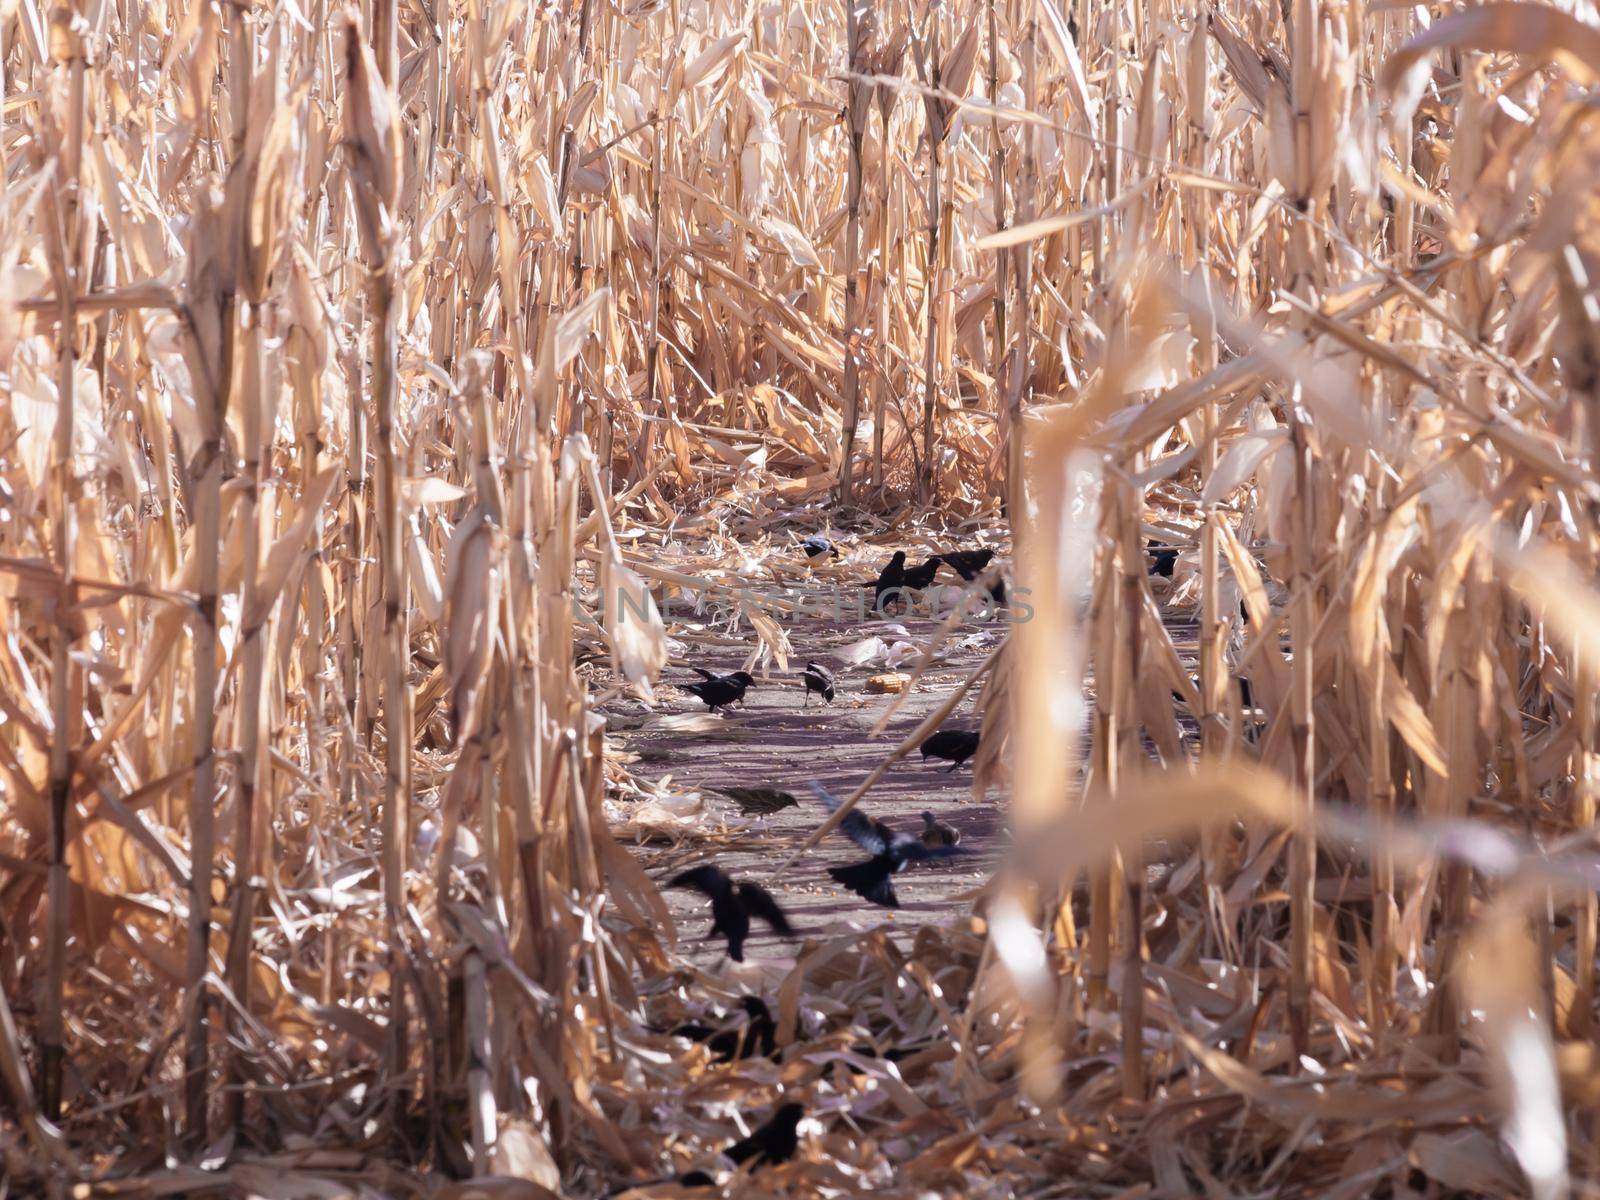 Crows in corn field by arinahabich